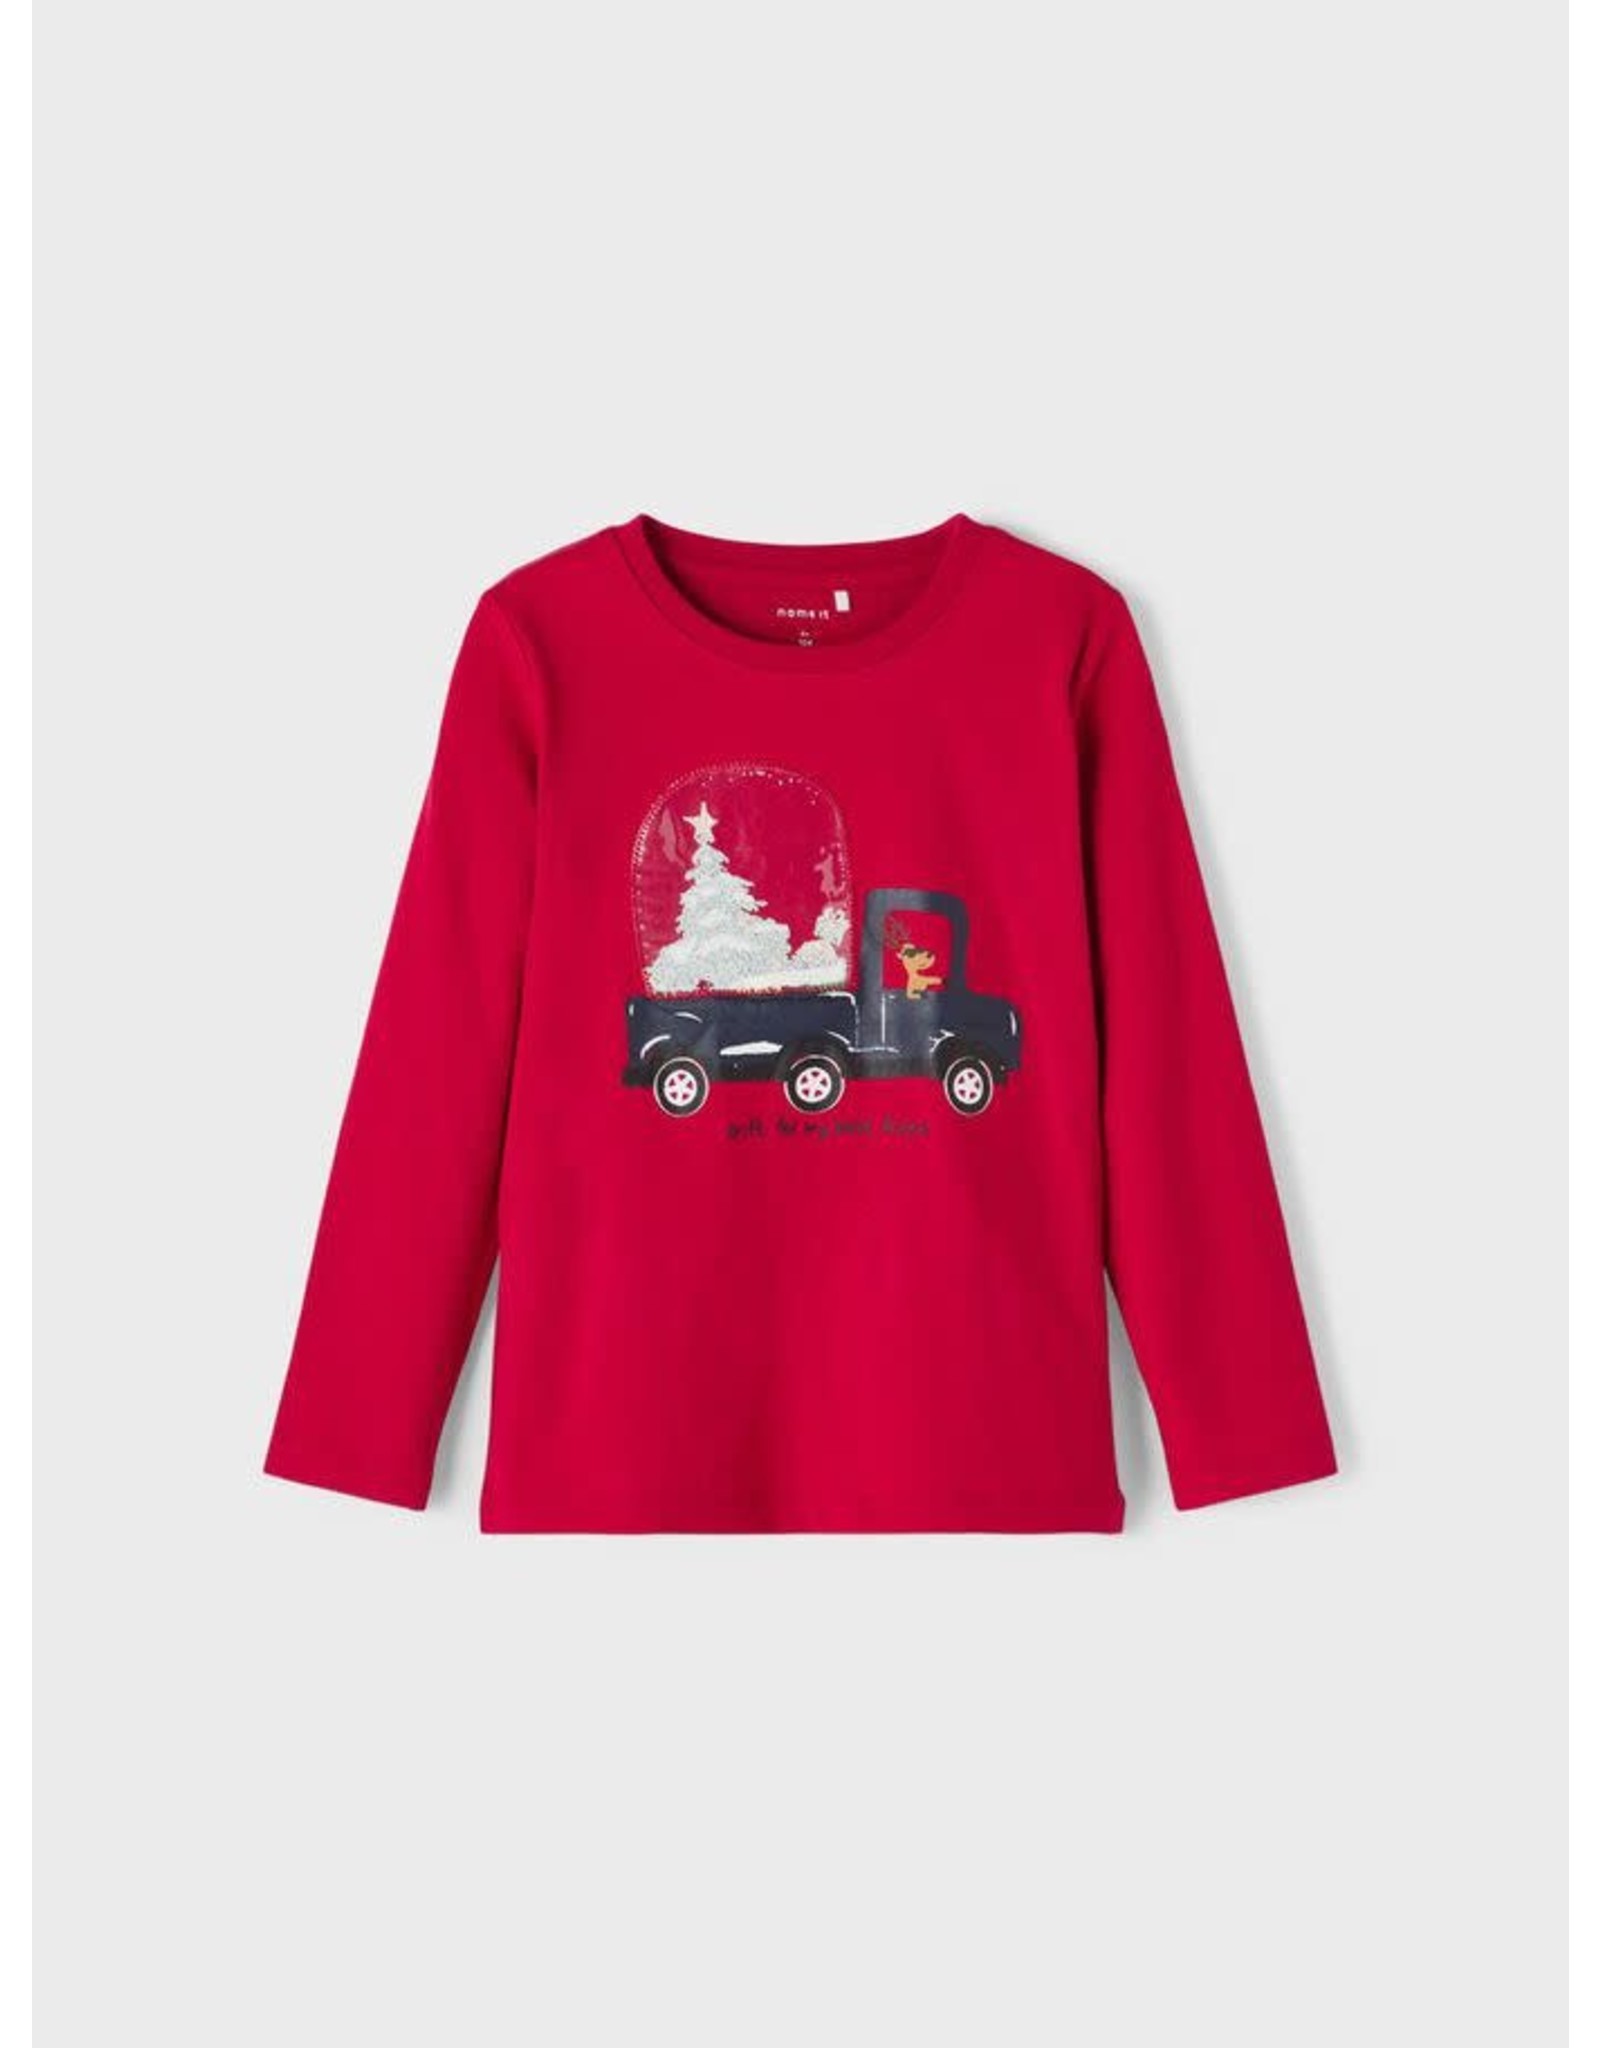 Name It Rode t-shirt met sneeuwbal op Kerst truck